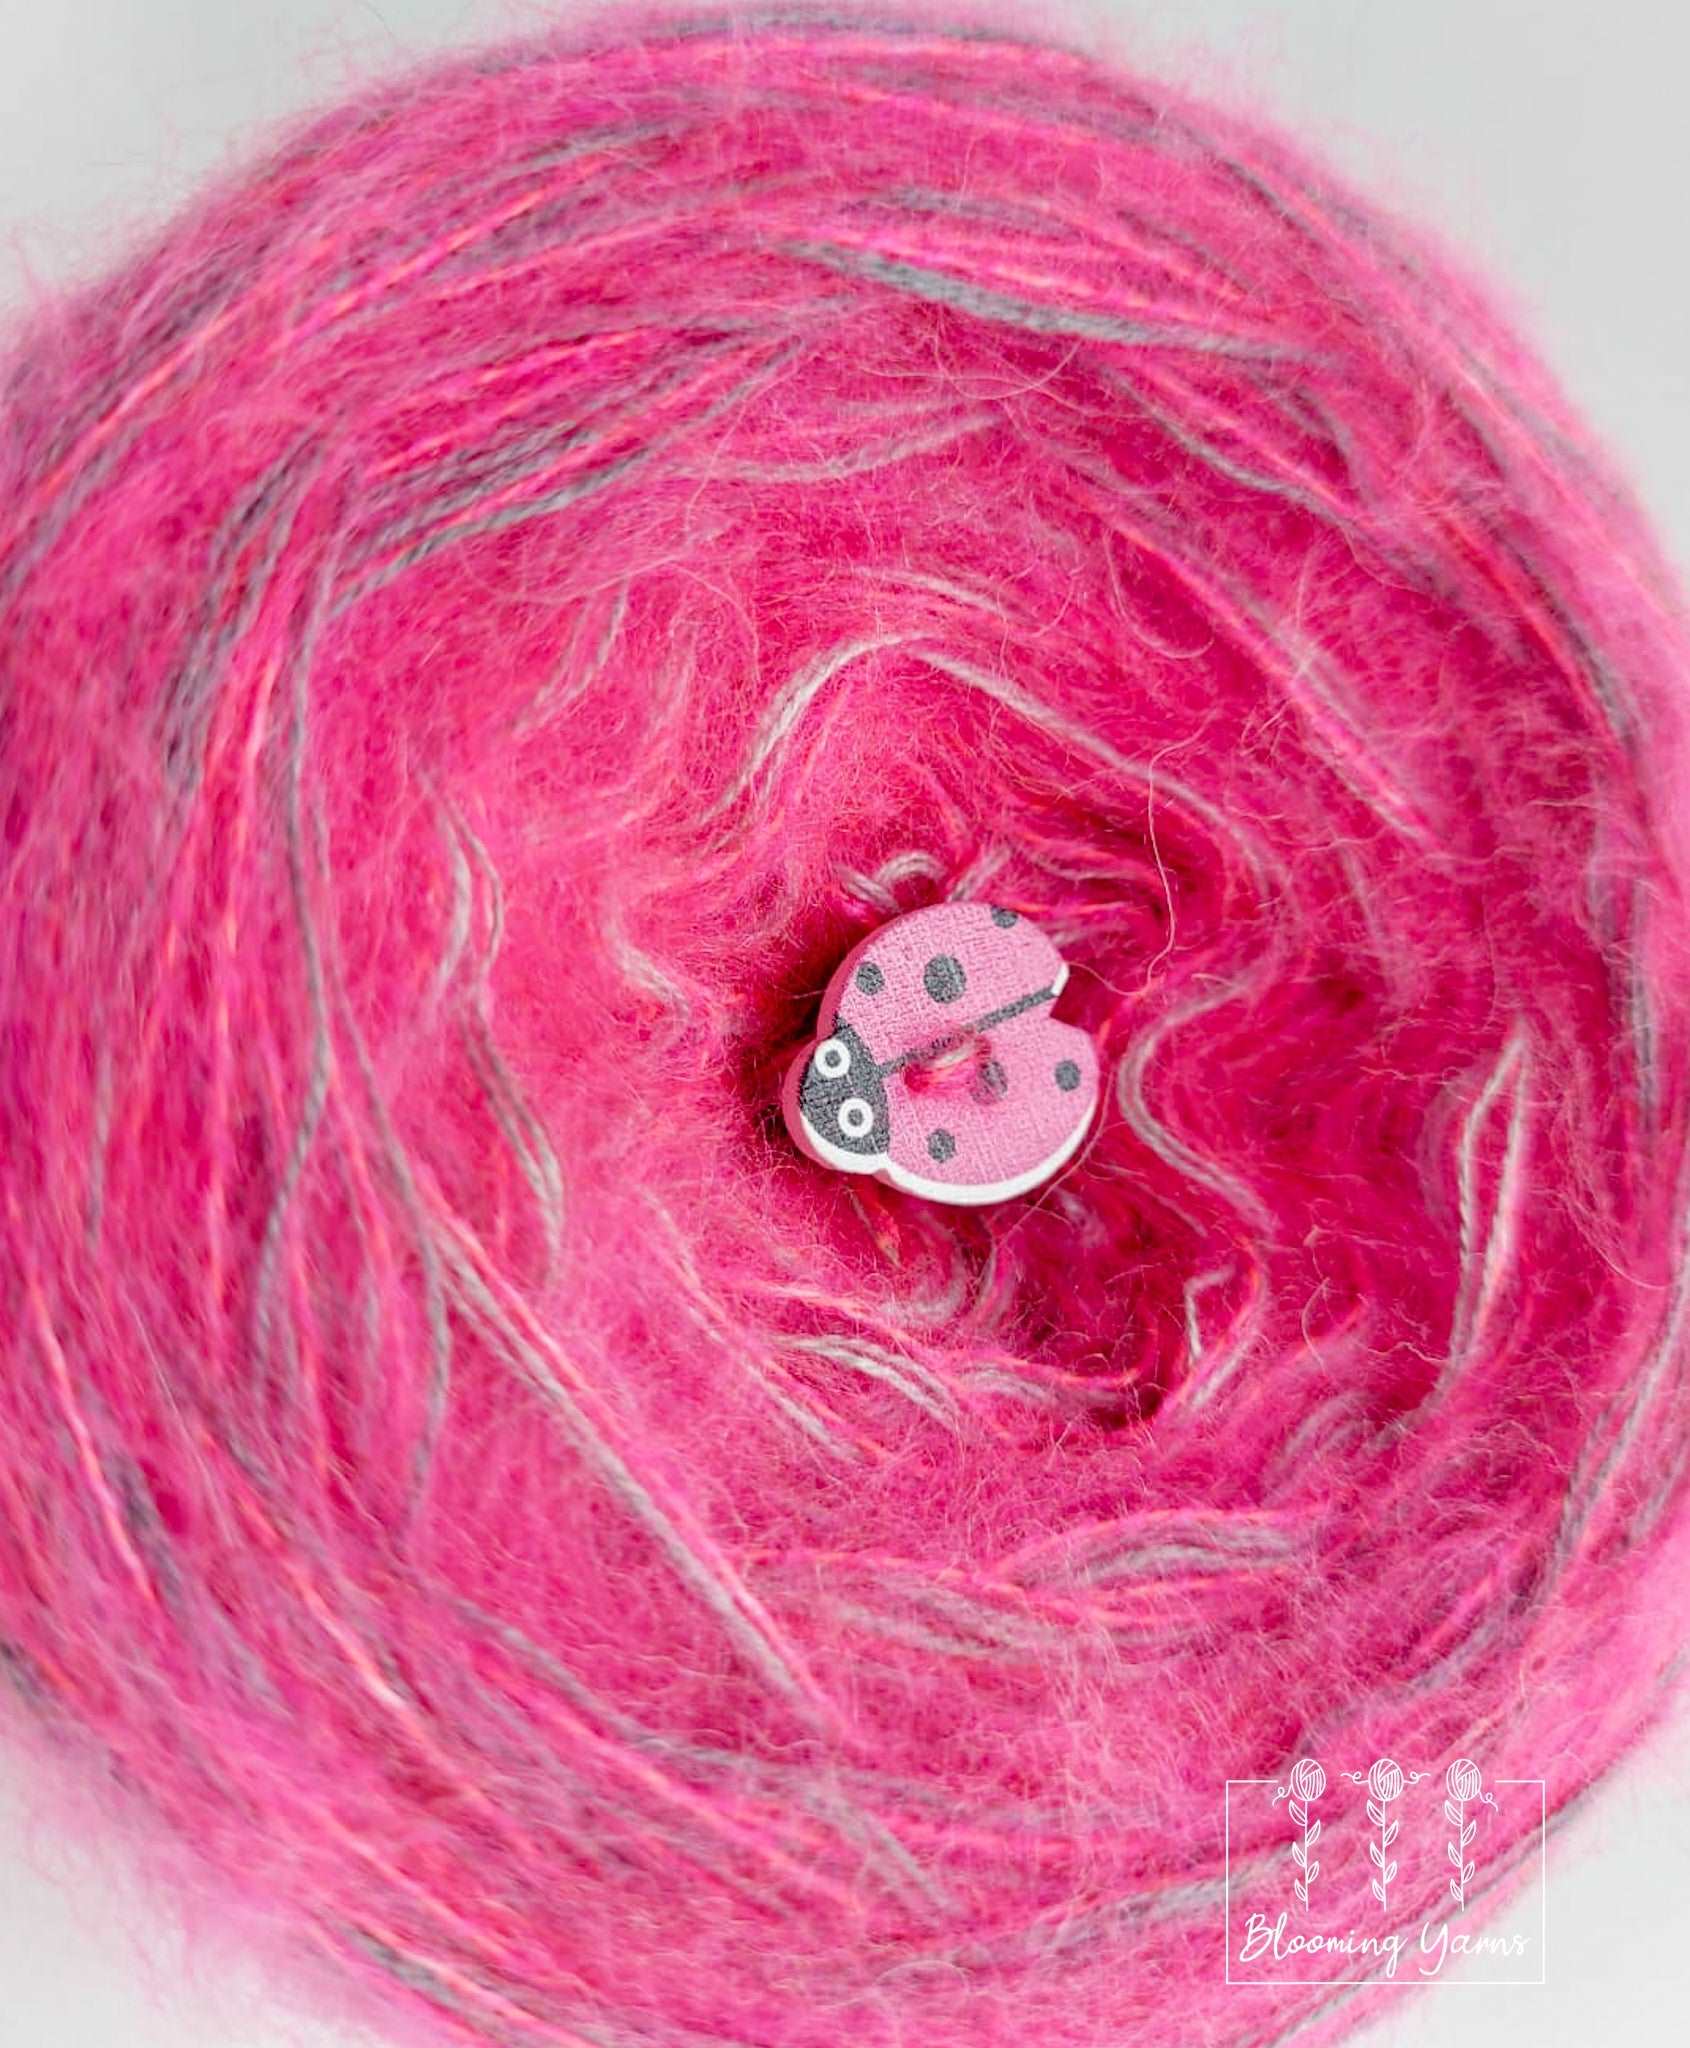 Handmade Yarn Cakes, Cotton Yarn for Crafts, Pink Yarn for Crocheting,  Designer Made Yarn, Limited Edition © 